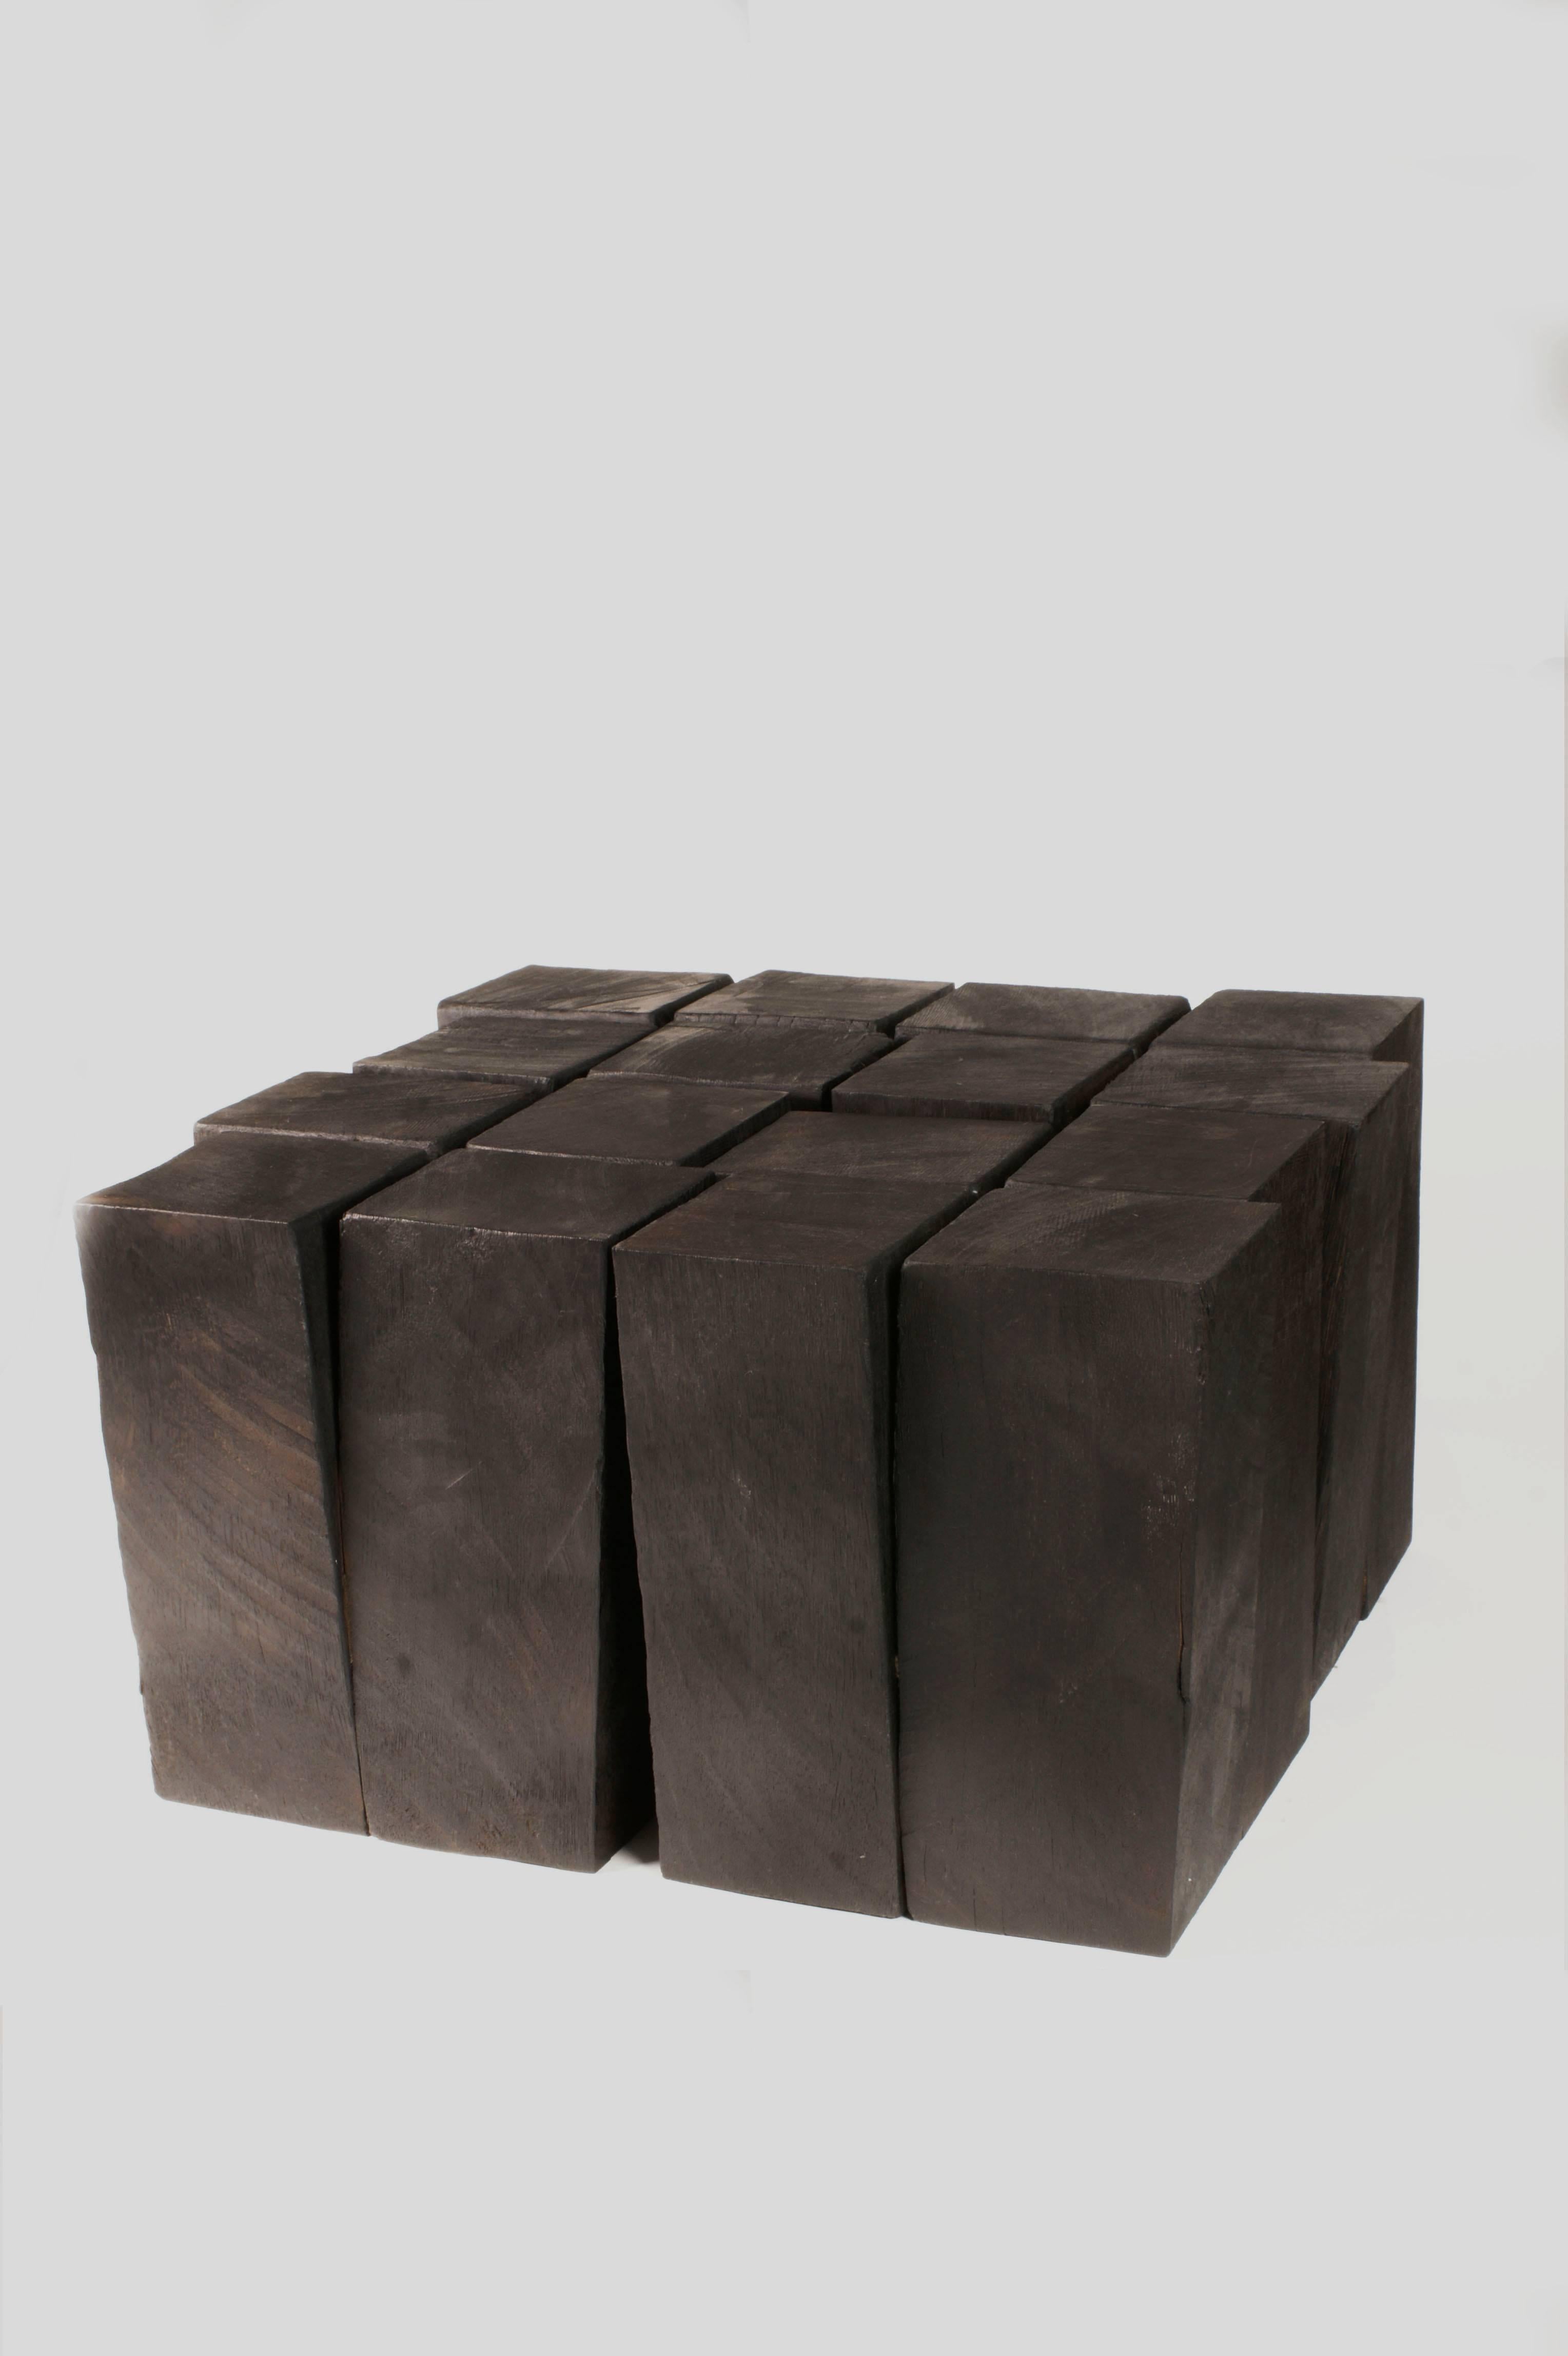 Four legs series
Coffee table in Iroko wood 
Four cubes 35 cm H x 64 cm W x 64 cm D - 22,5” H x 14.5” W x 8.3” D
Six cubes 35 cm H x 96 cm W x 64 cm D - 22,5” H x 14.5” W x 8.3” D
Signed by Arno Declercq

Arno Declercq
Belgian designer and